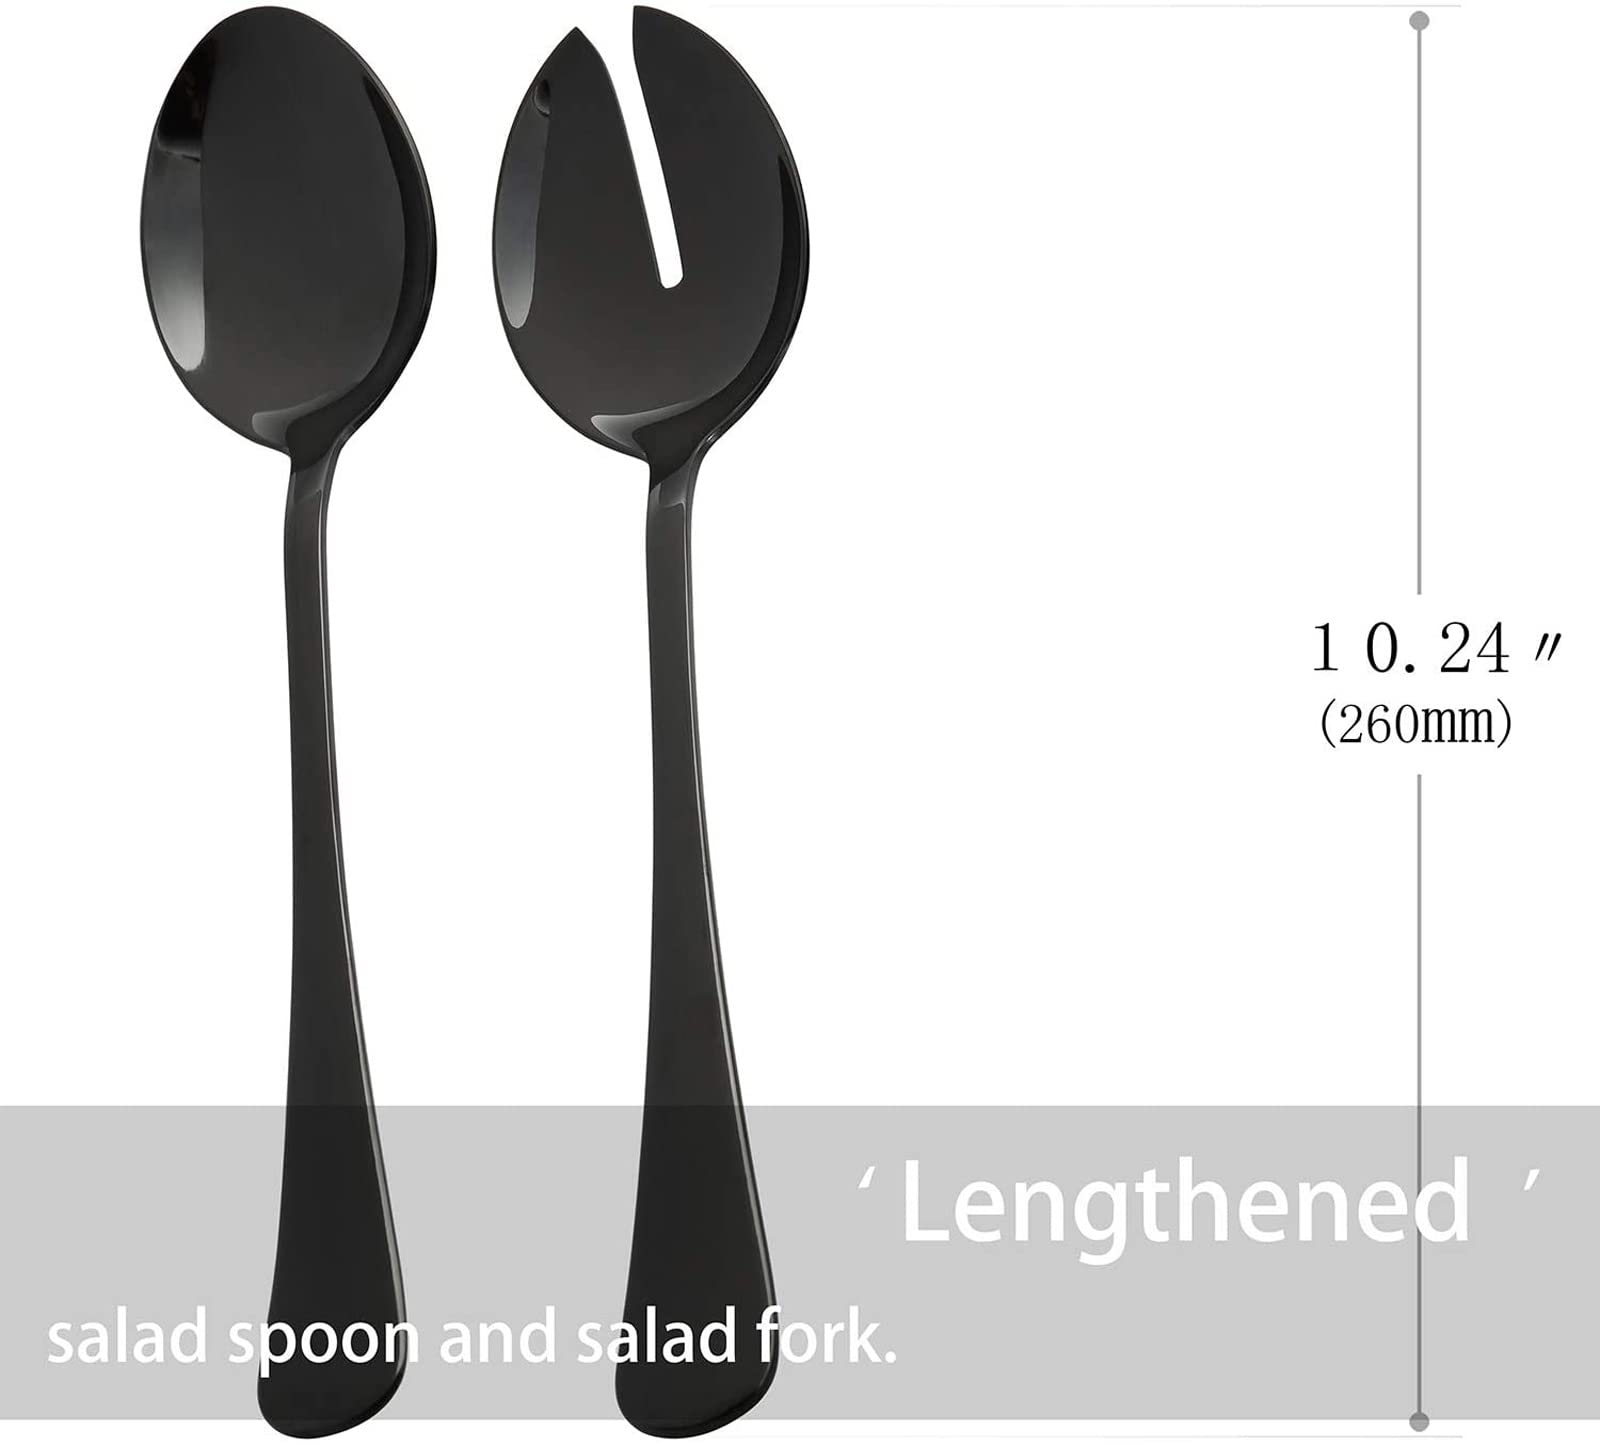 Black Serving utensils set. Stainless Steel Hostess Flatware Sets 7-Piece Includes Silverware Large Salad Serving Spoons, Forks & Slotted Spoons,sugar spoons,butter knife.Dishwasher Safe